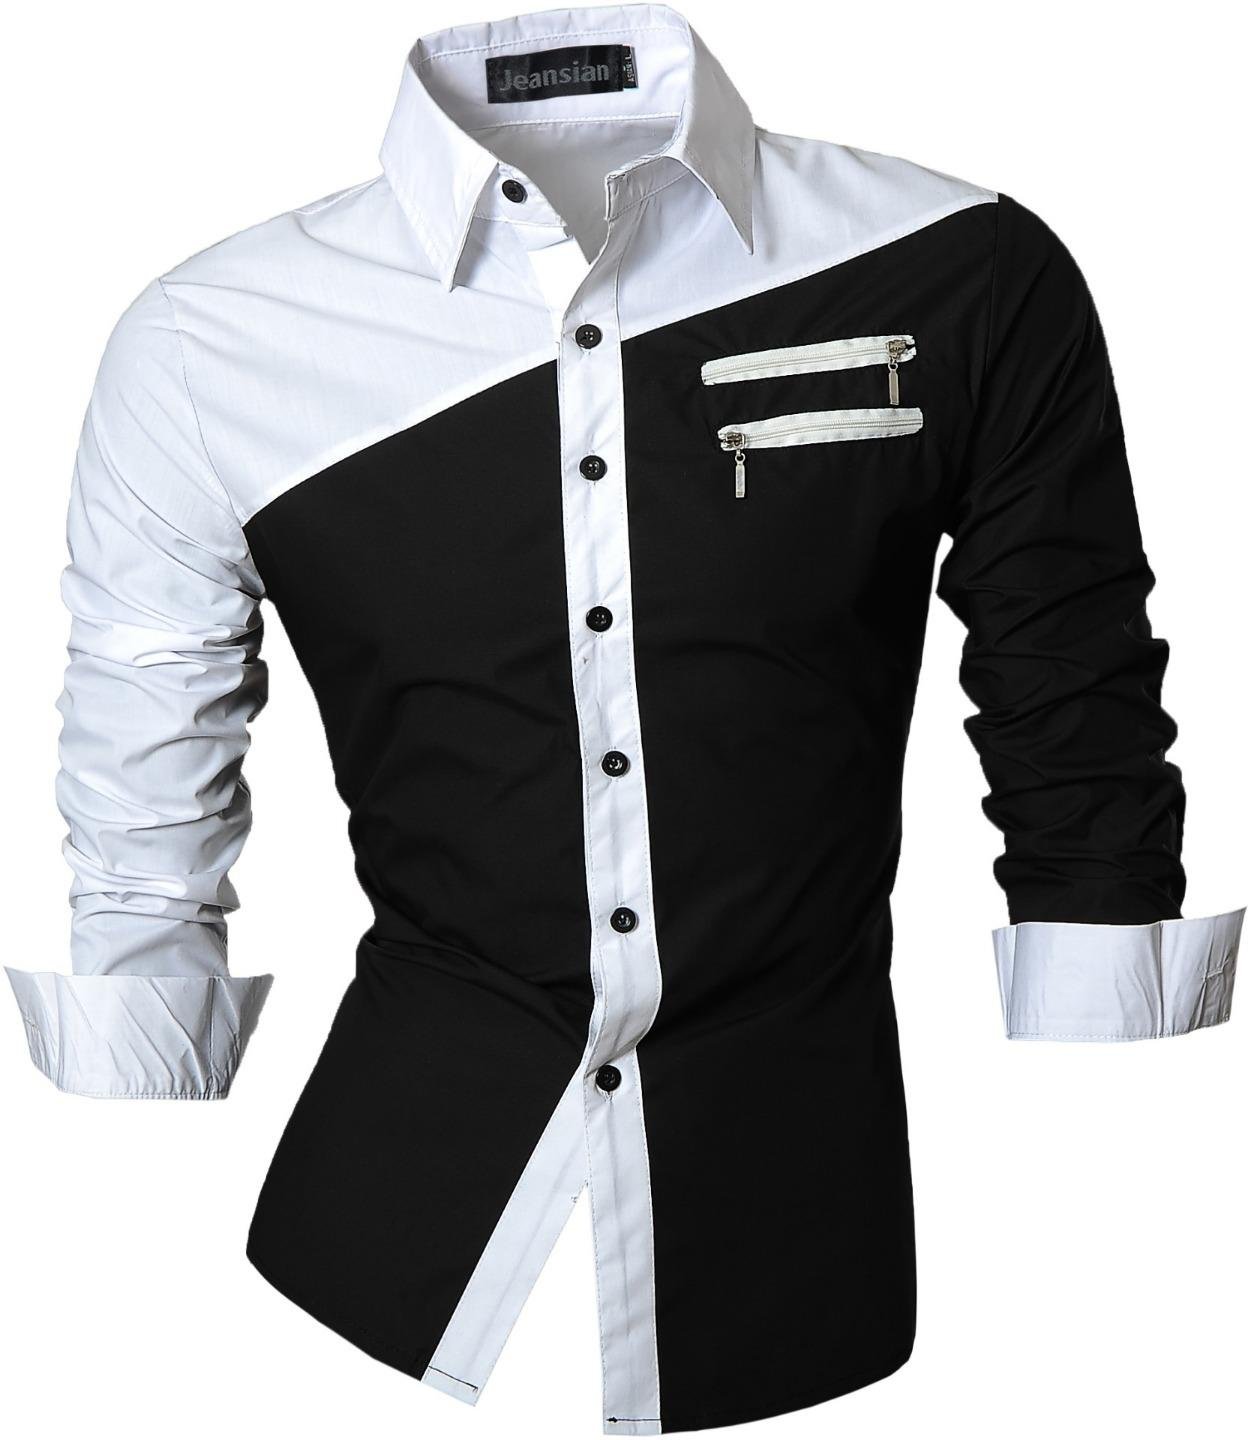 jeansian Herren Freizeit Hemden Shirt Tops Mode Langarmshirts Slim Fit Z015 Black XL